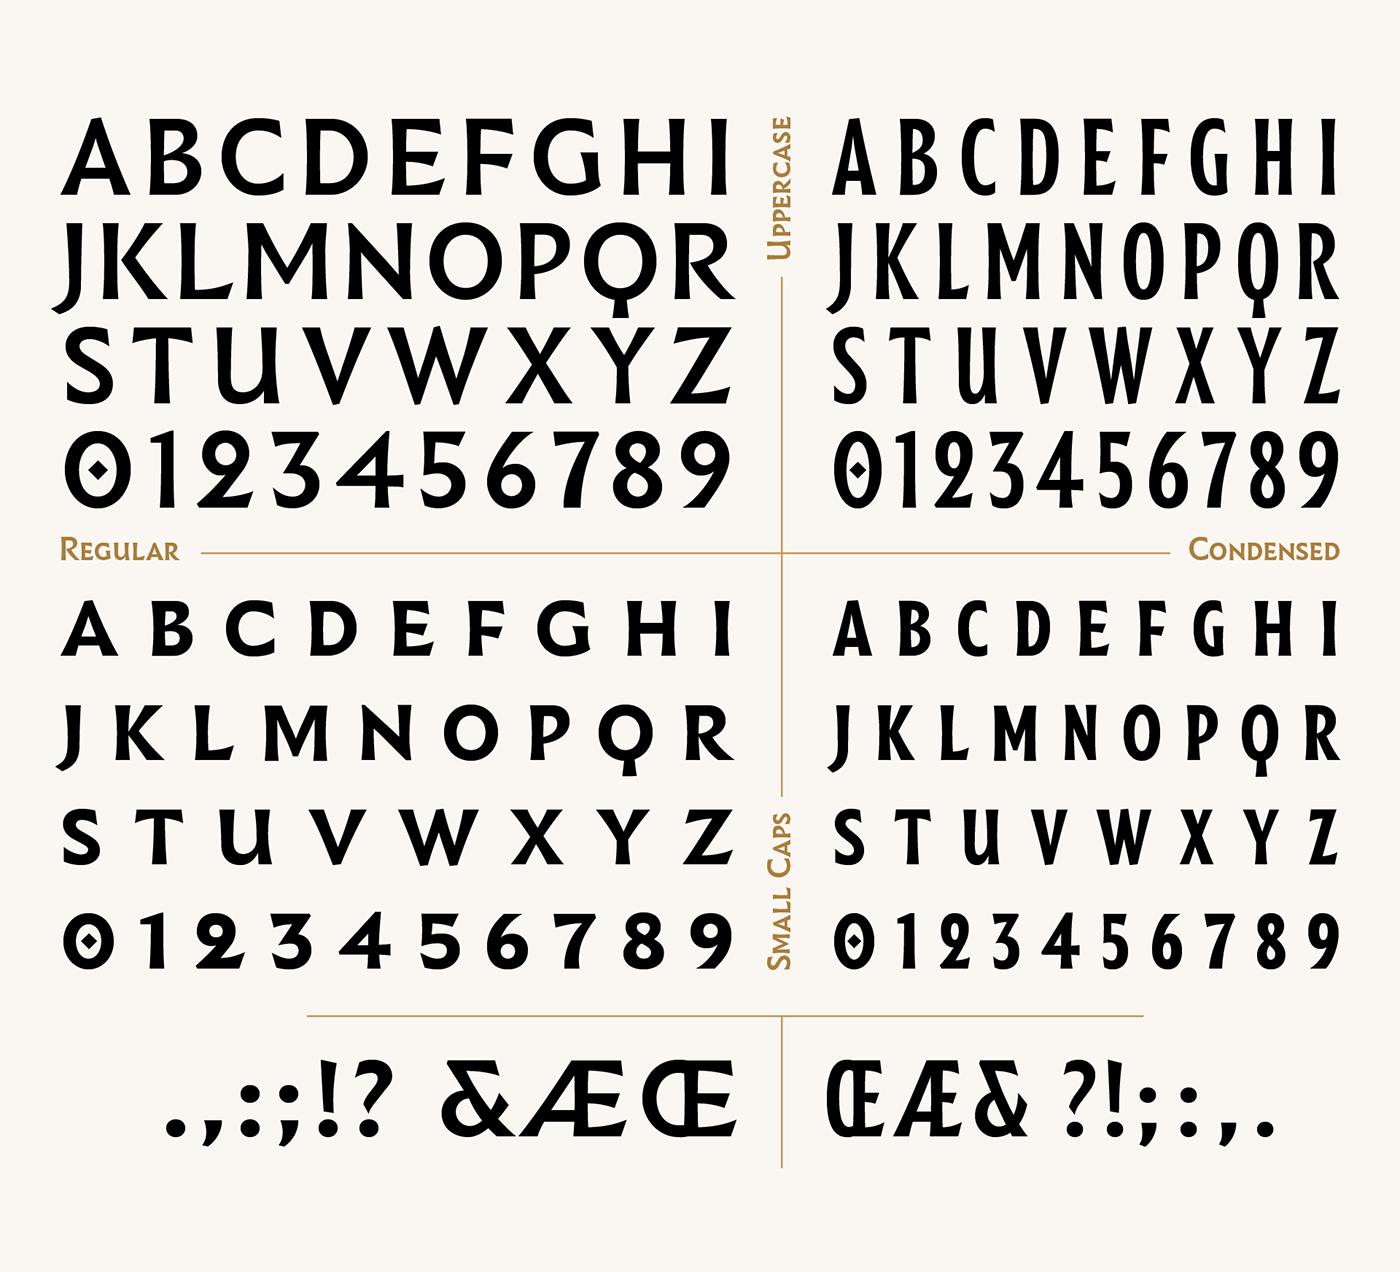 incised  custom font Typeface Estonia diacritics Ligatures Variable Font condensed Display historical